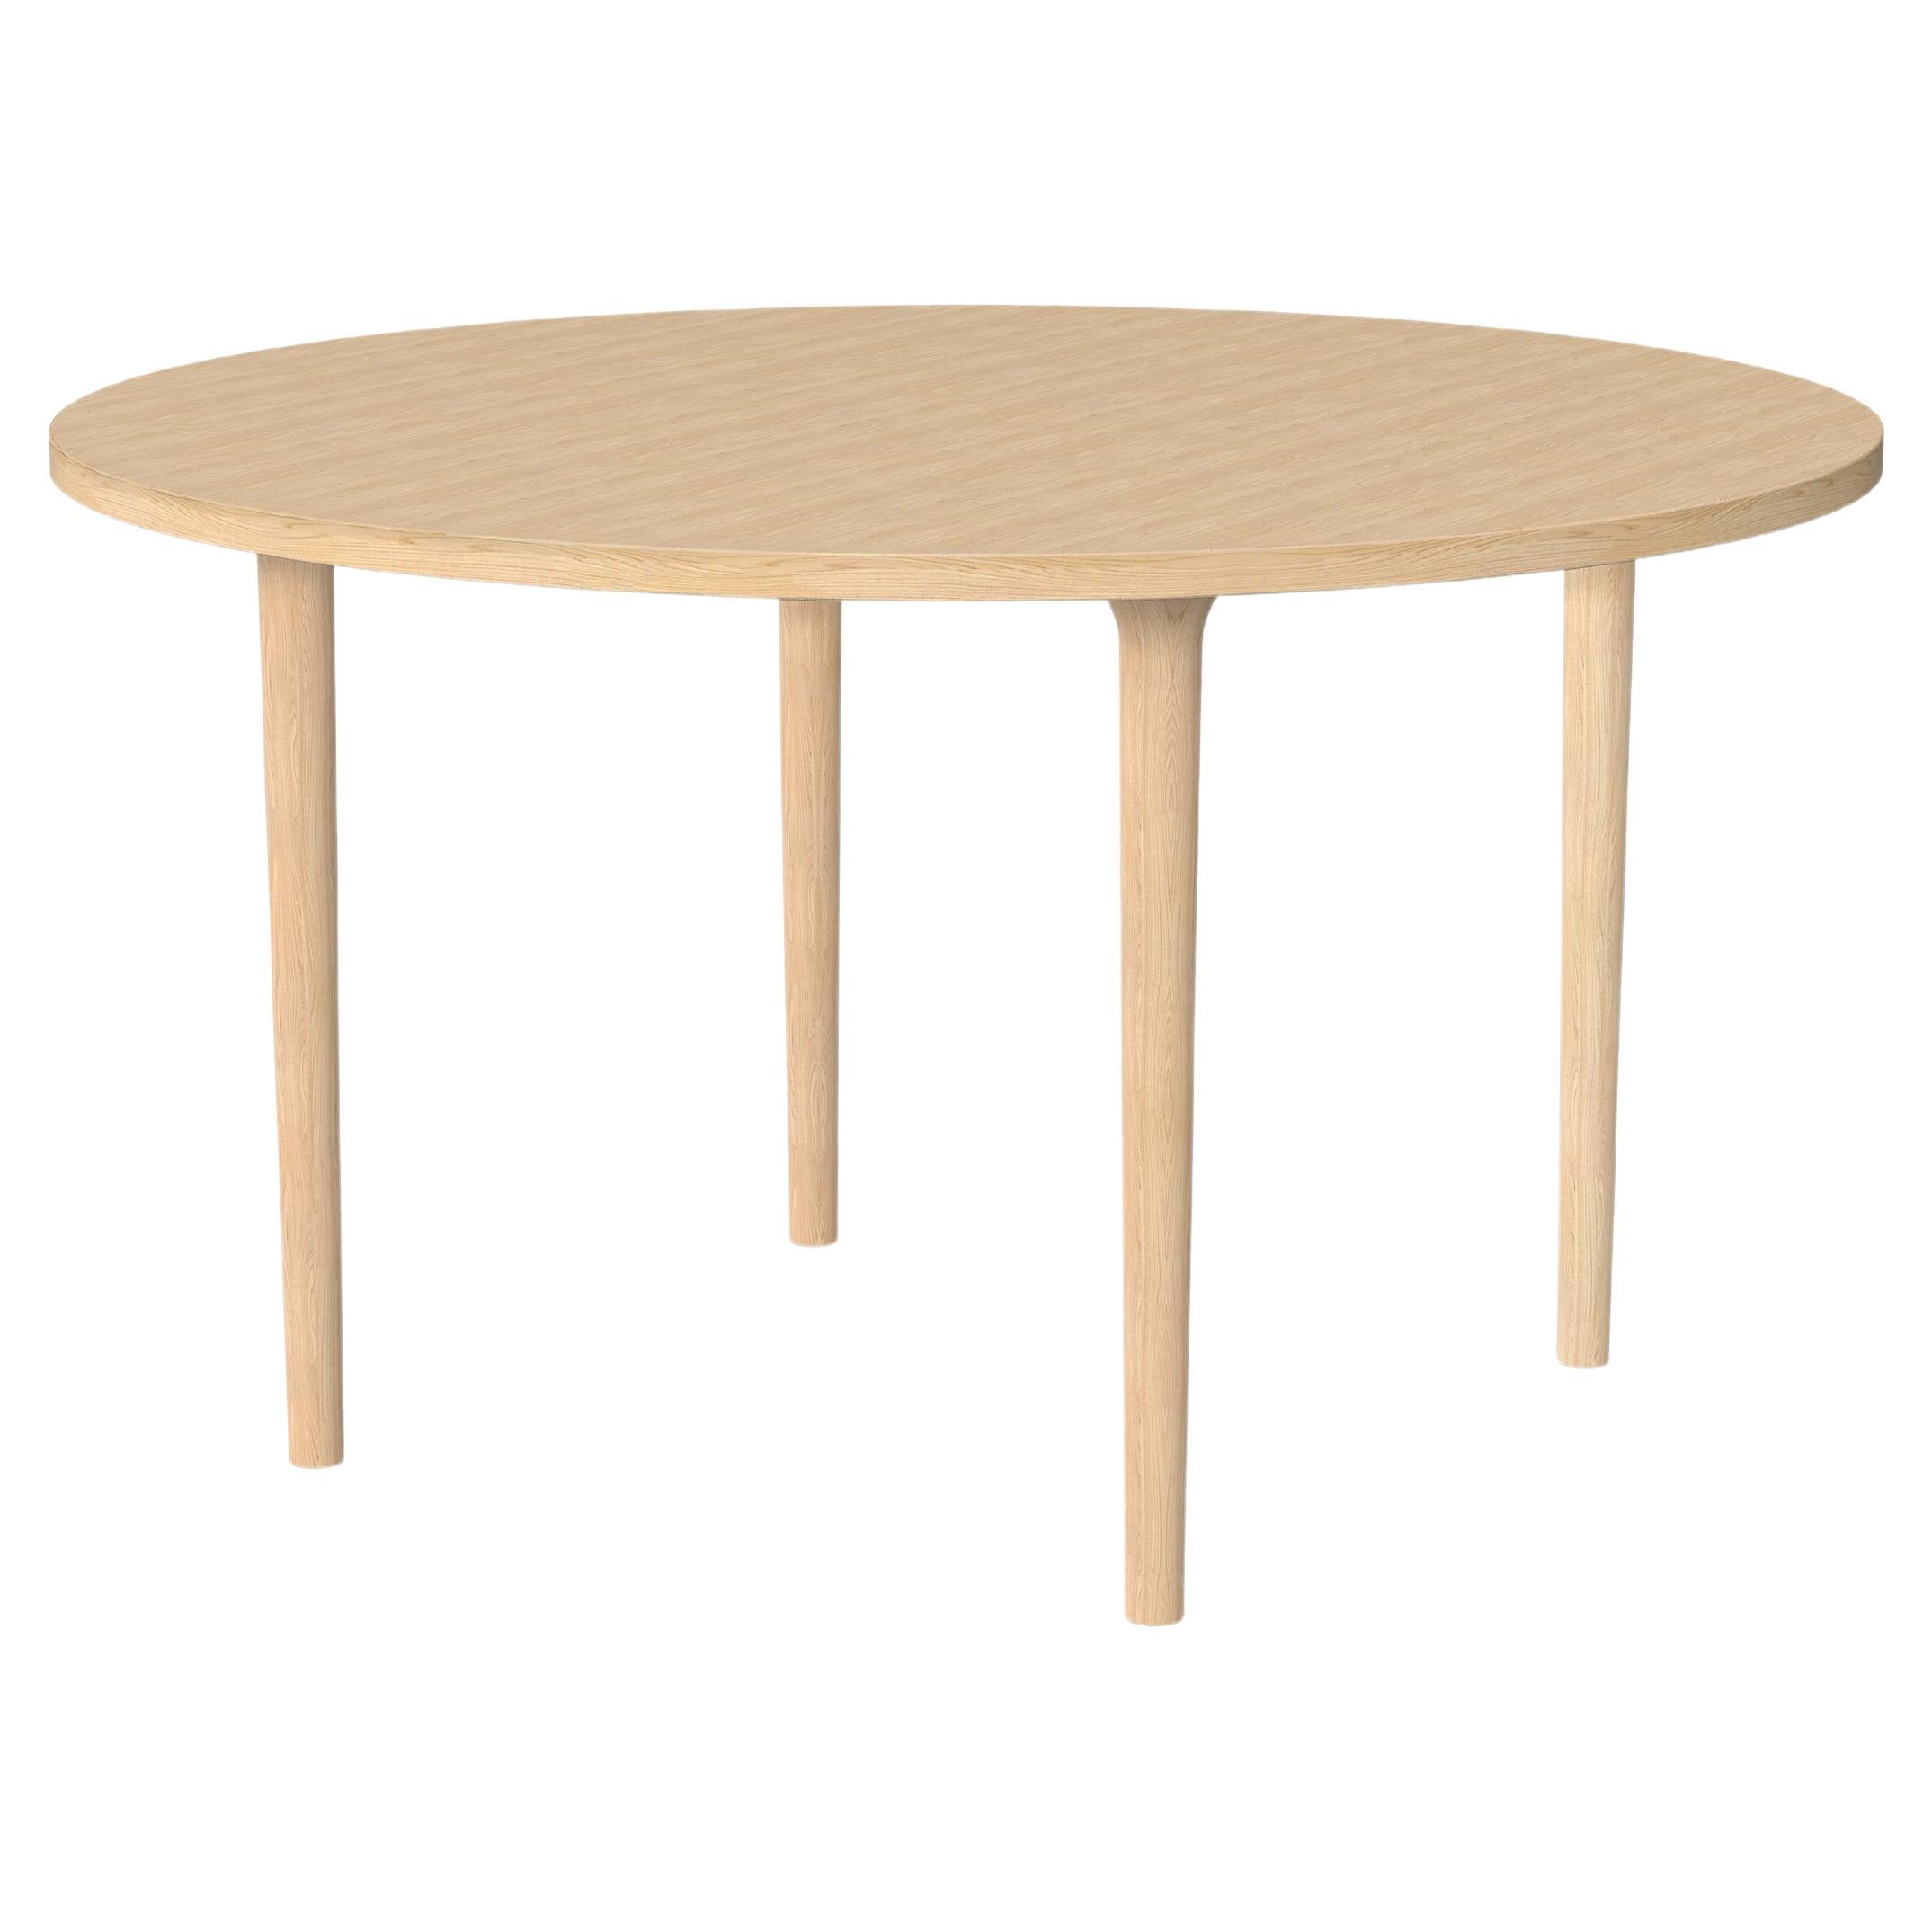 Table moderne minimaliste ronde en bois de frêne 130 cm